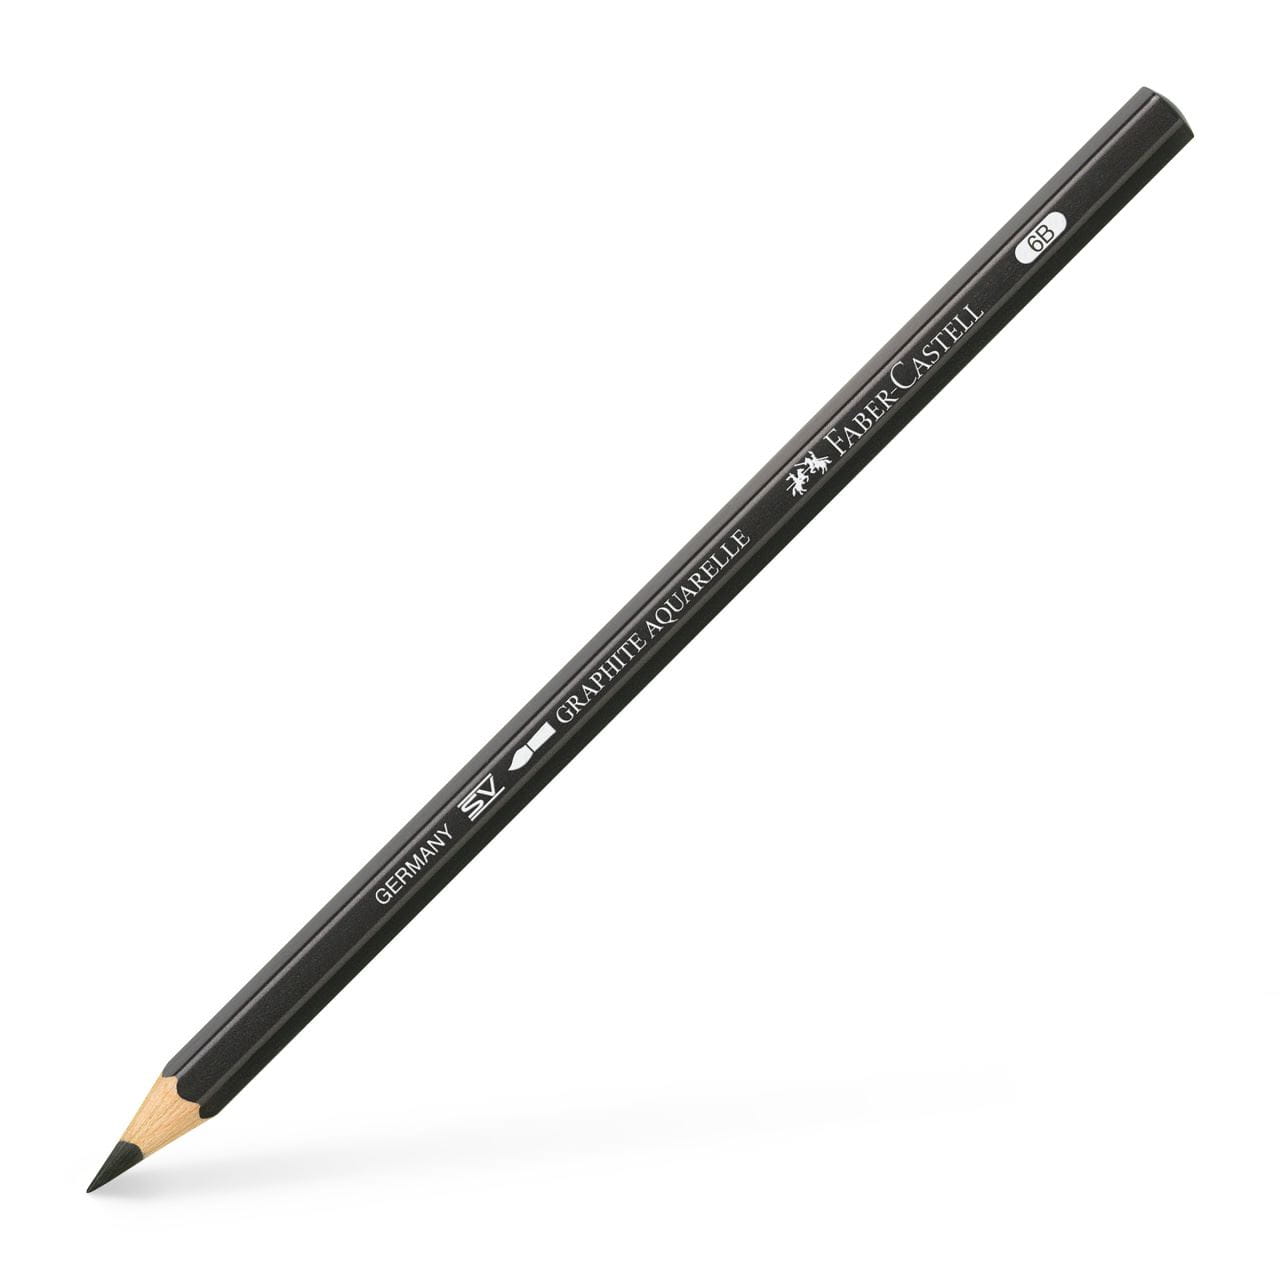 Faber-Castell - Graphite Aquarelle pencil, 6B